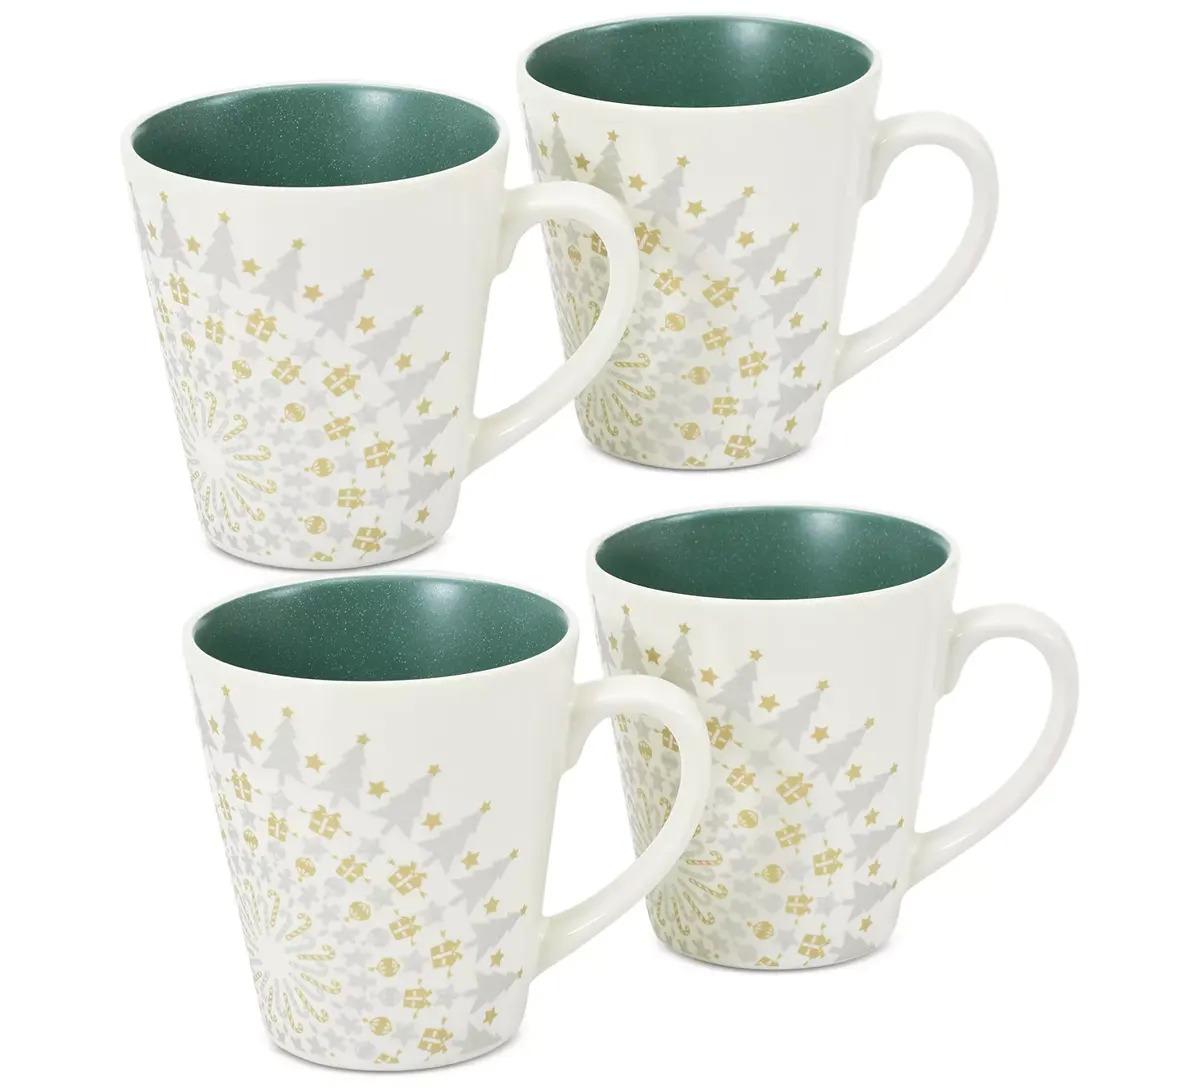 Noritake Colorwave Holiday Mugs Set of 4 for $9.99